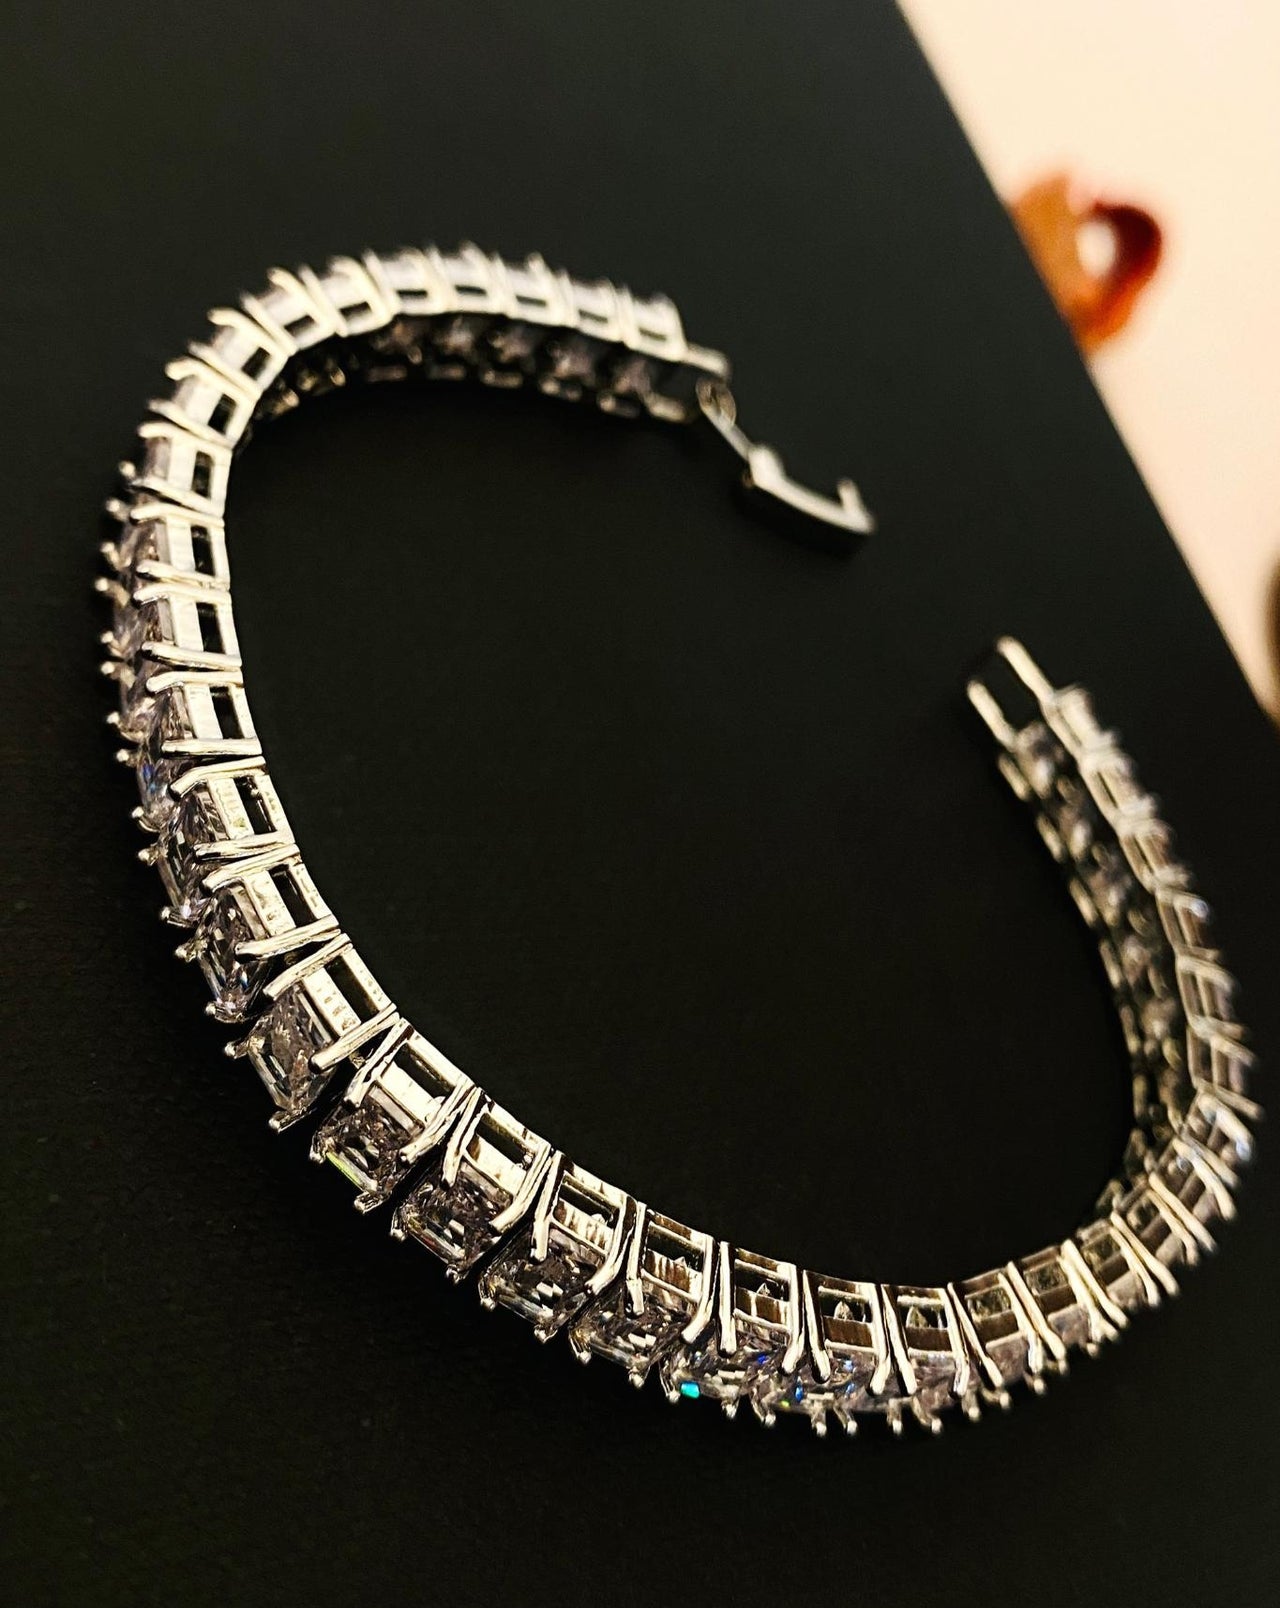 Silver plated Bracelet